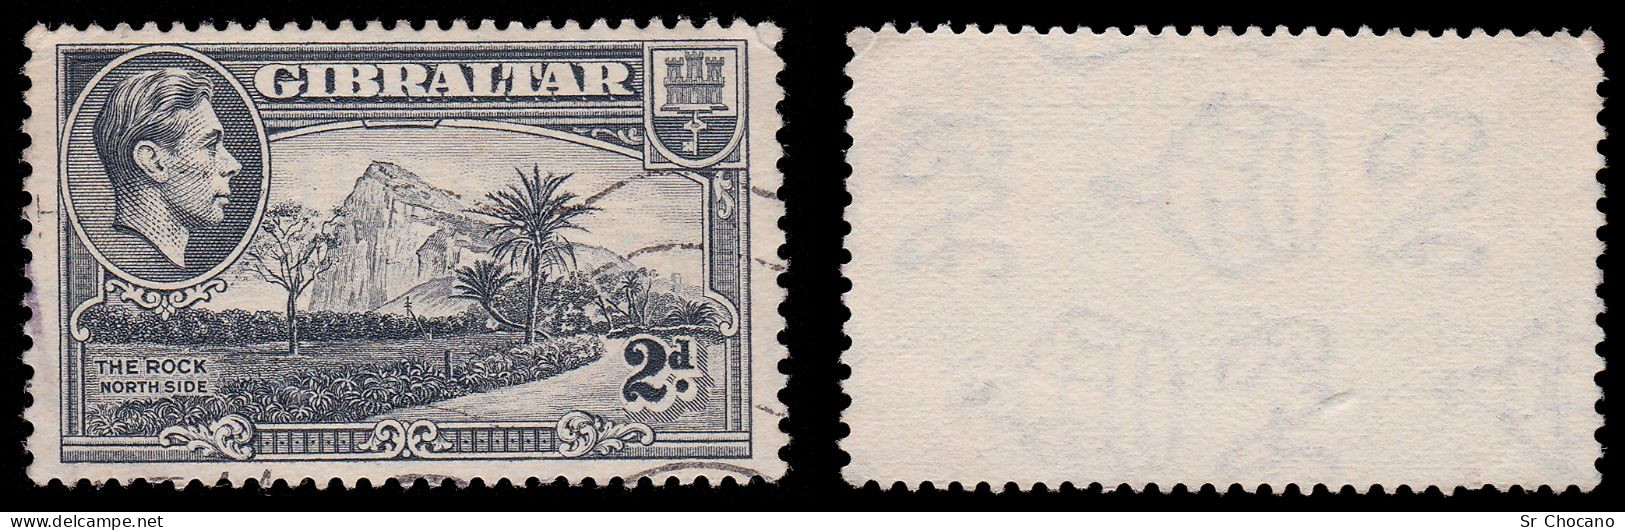 GIBRALTAR STAMP.1943.2d.SG.124b.WMK SIDEWAYS.USED.P 13. - Gibraltar